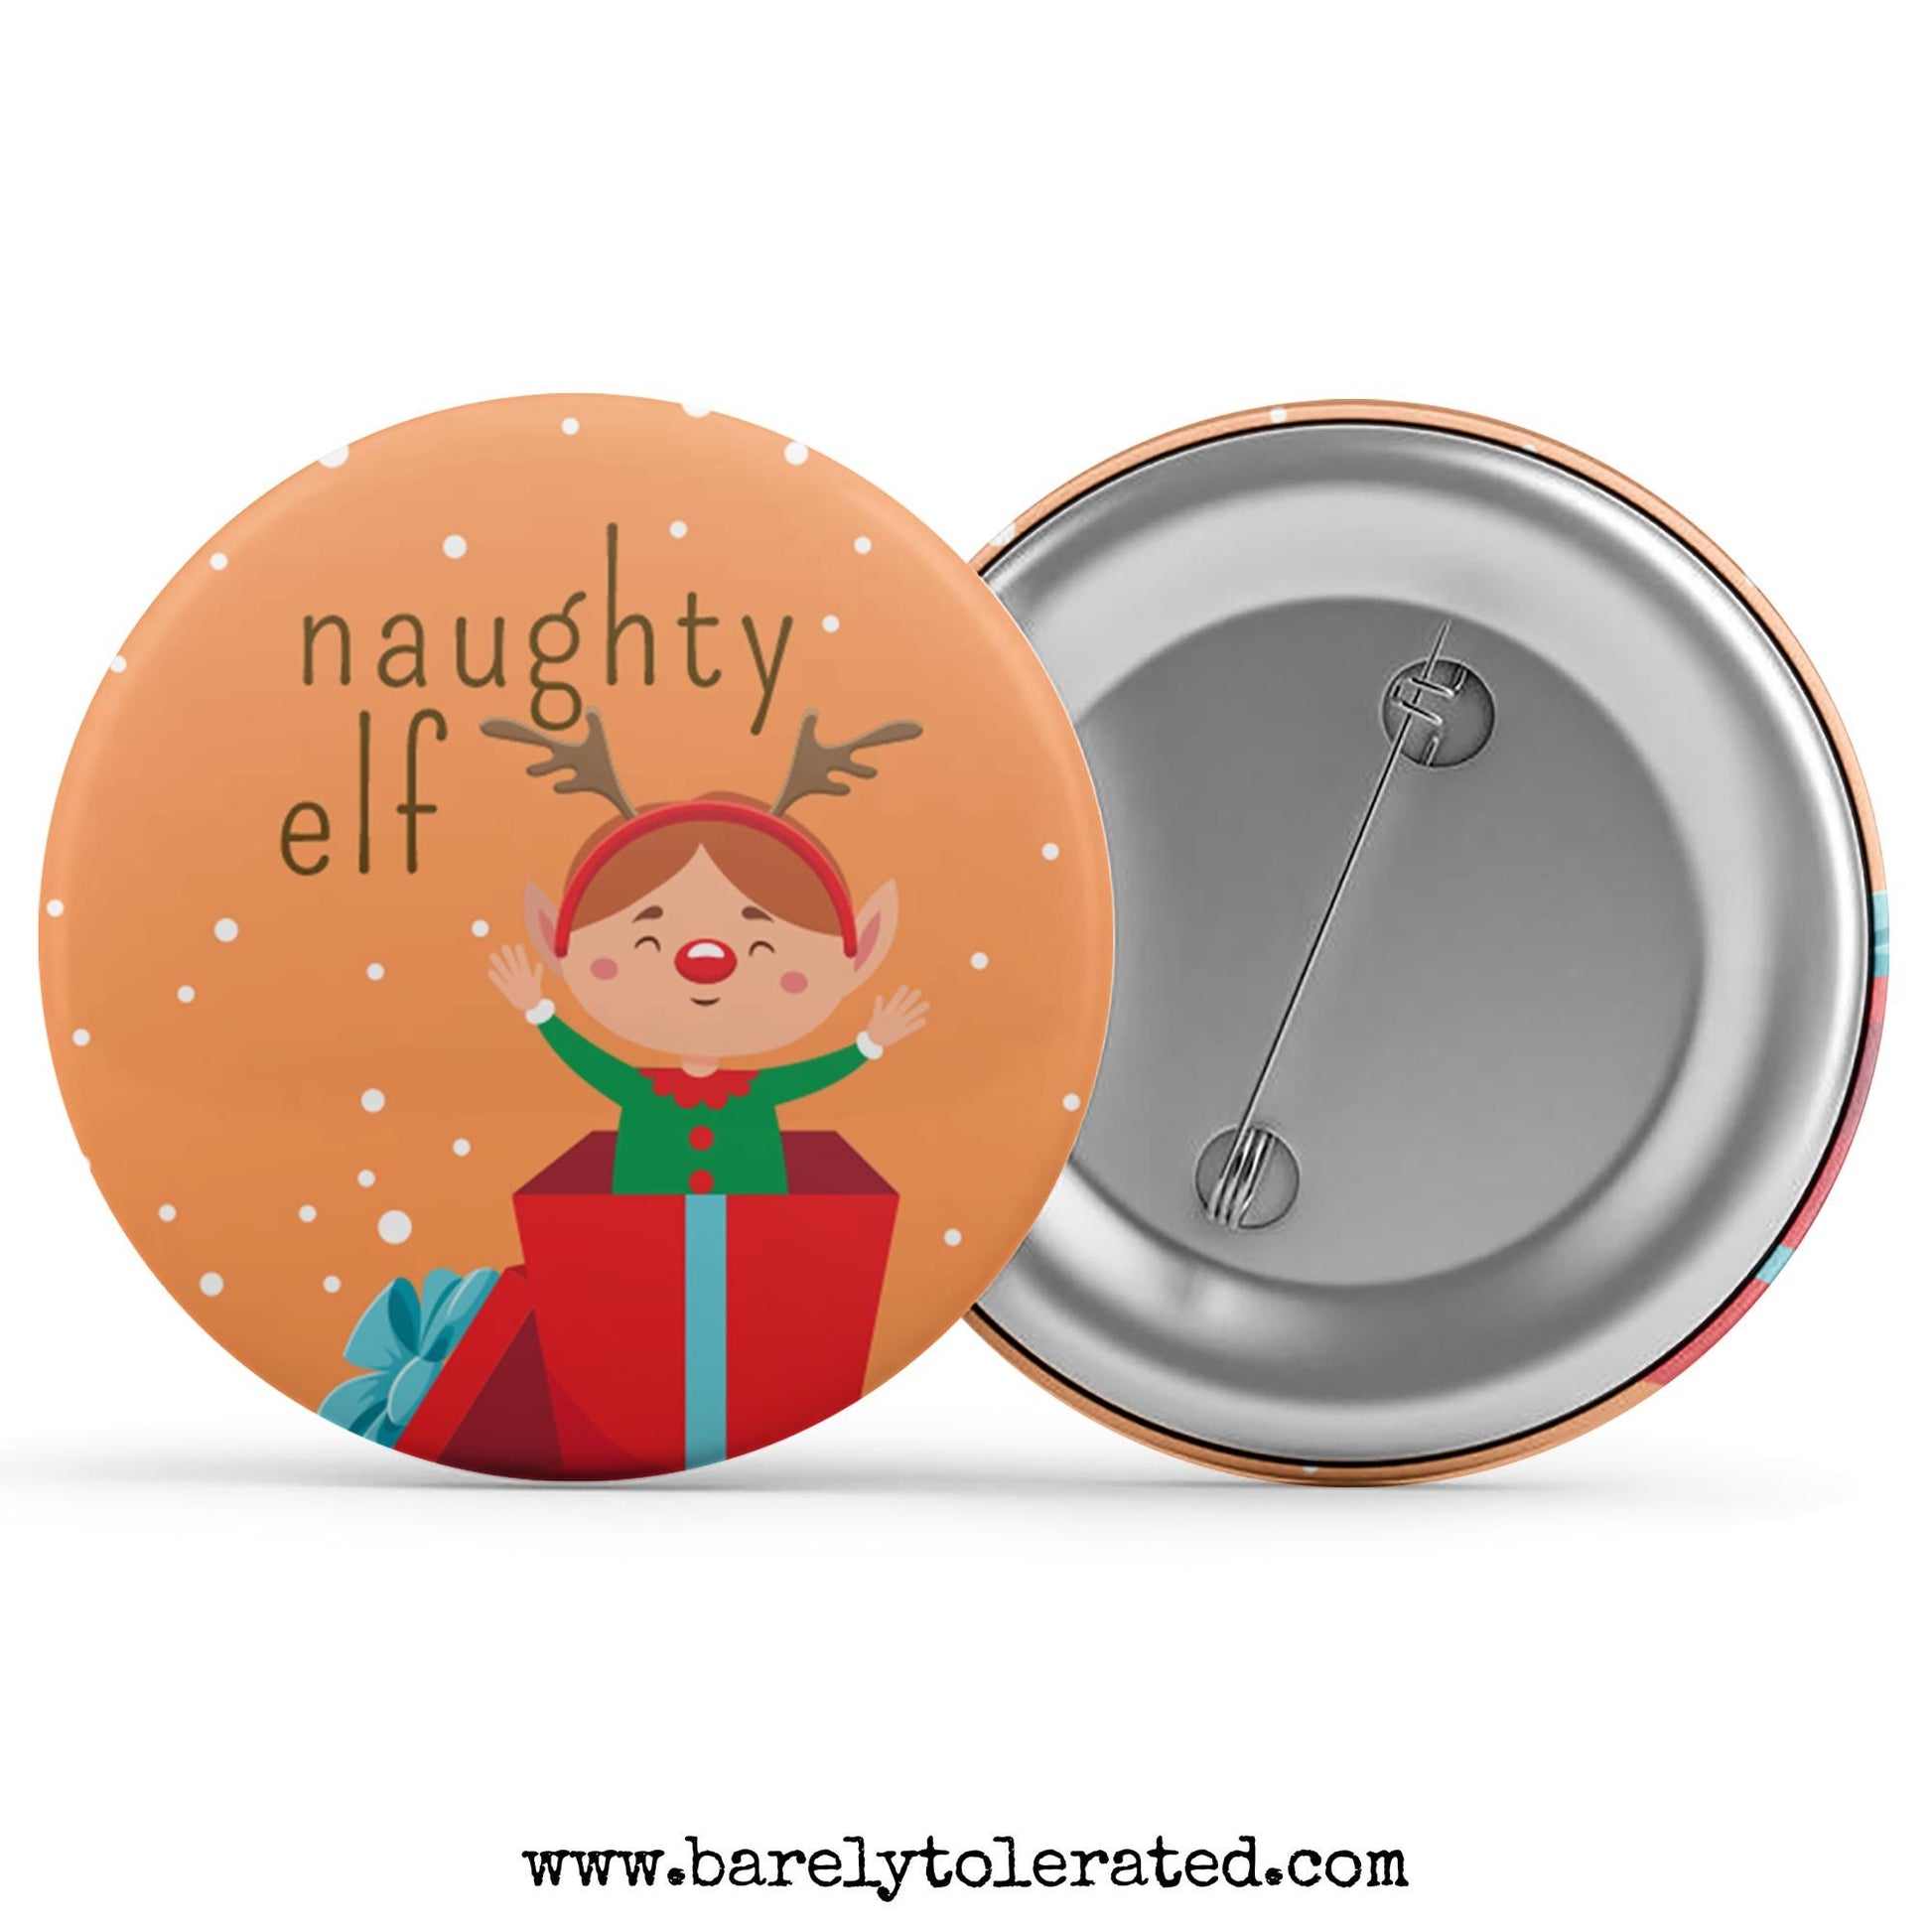 Naughty Elf - Christmas Elf on a Shelf Image